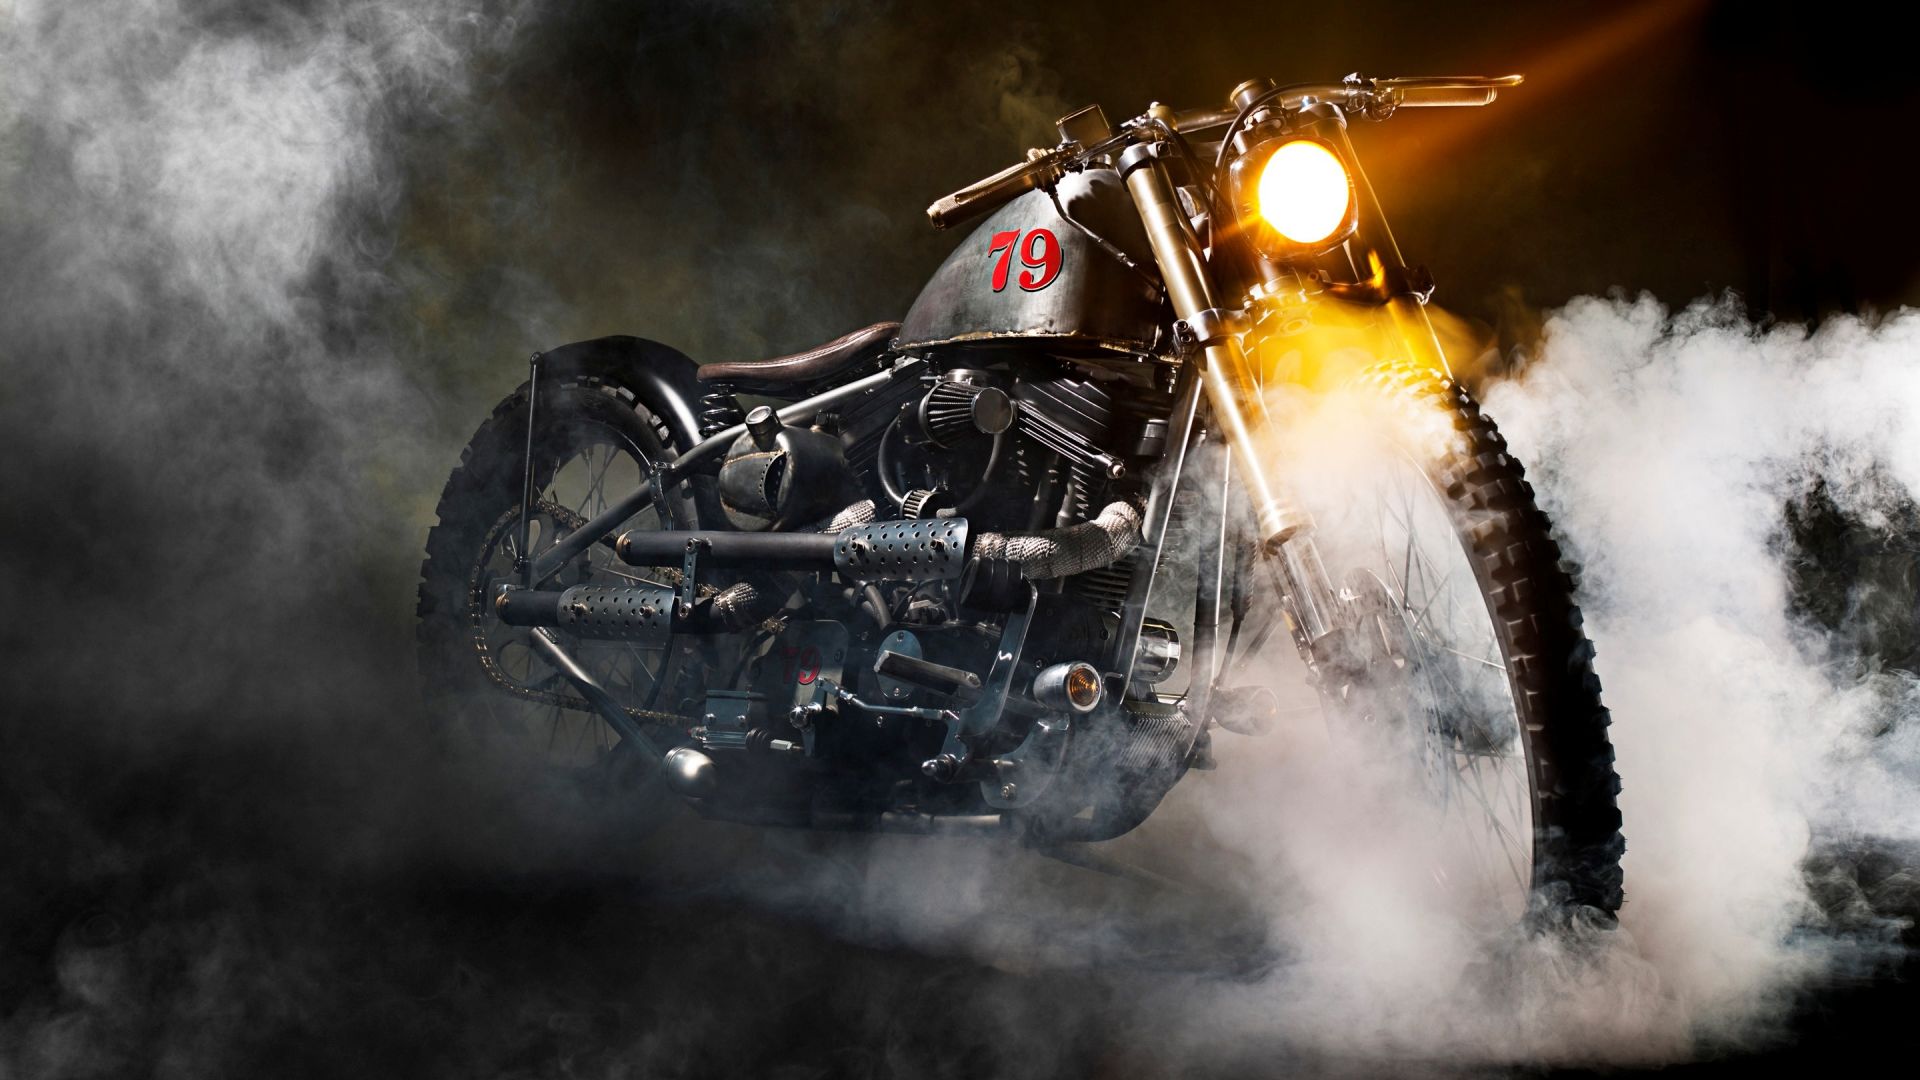 Wallpaper Boneshaker motorcycle